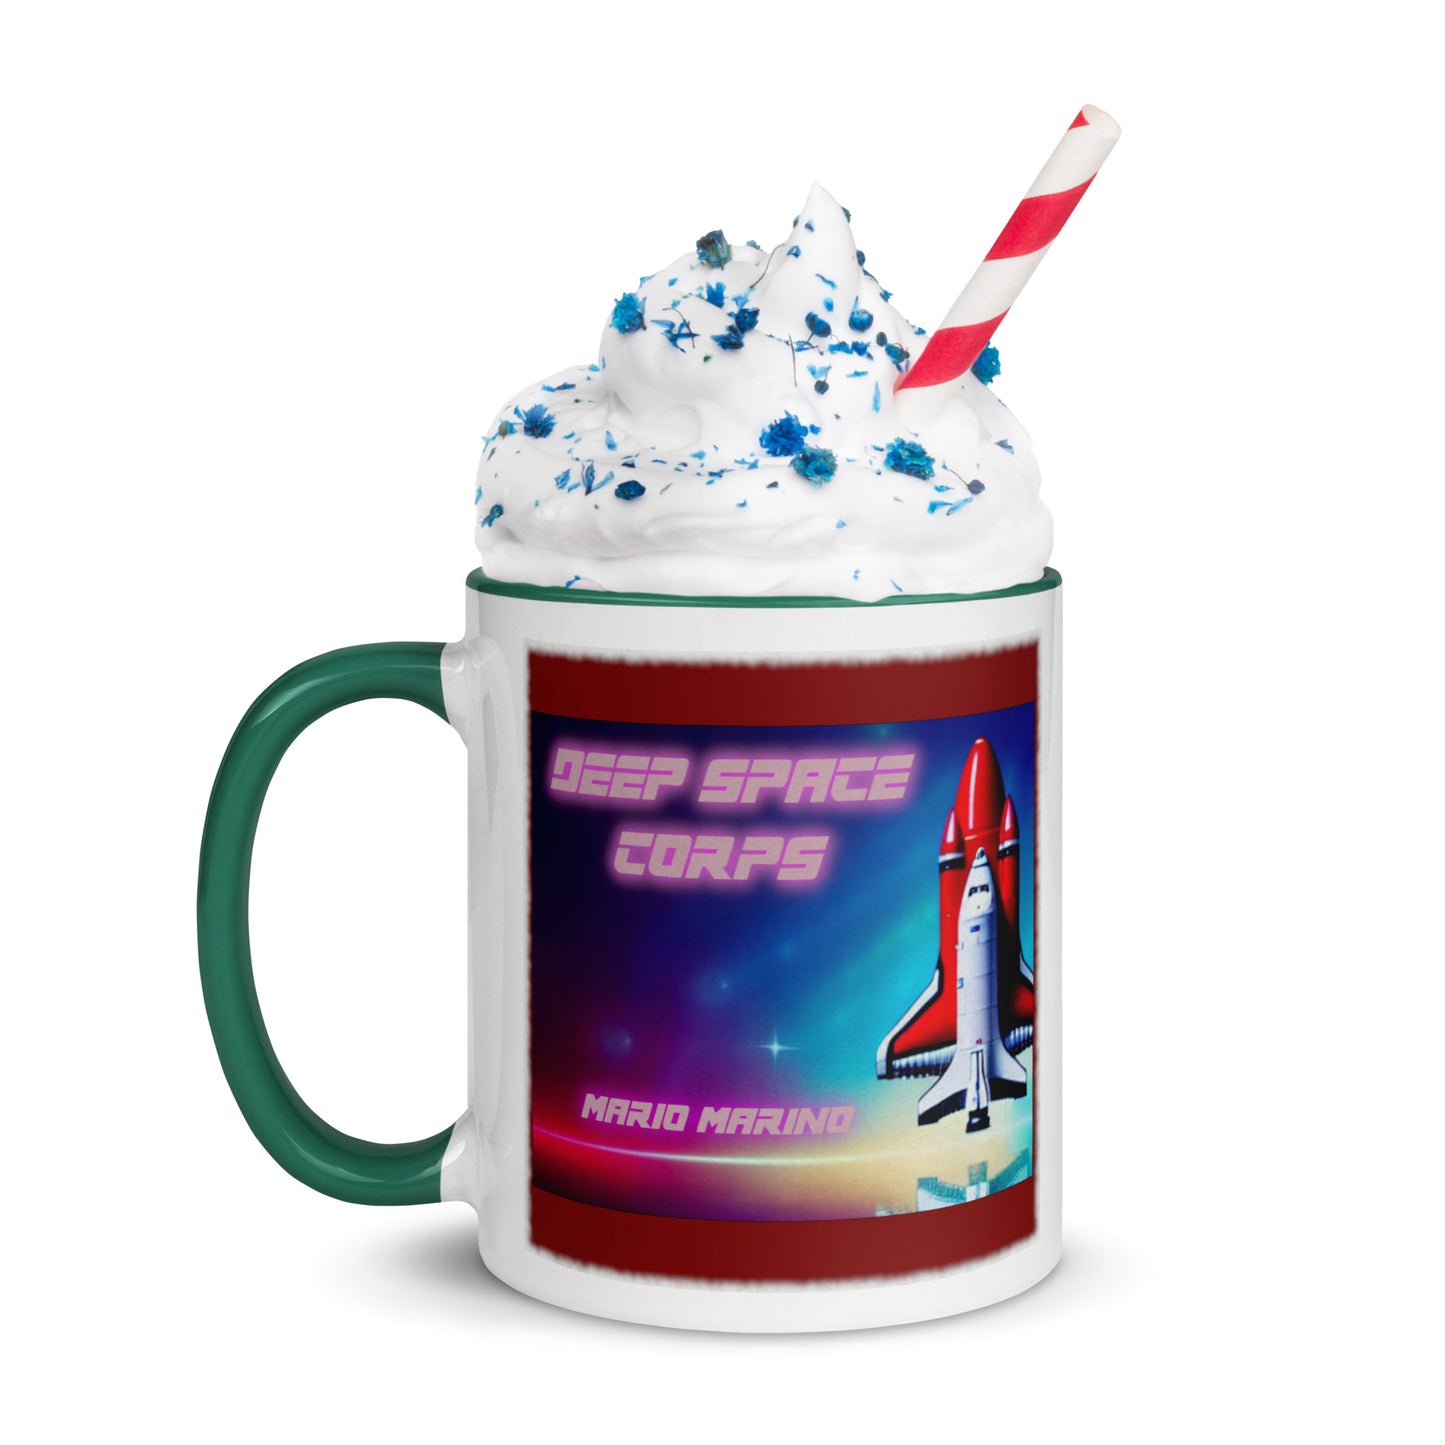 Mario Marino - Deep Space Corps Mug With Color Inside